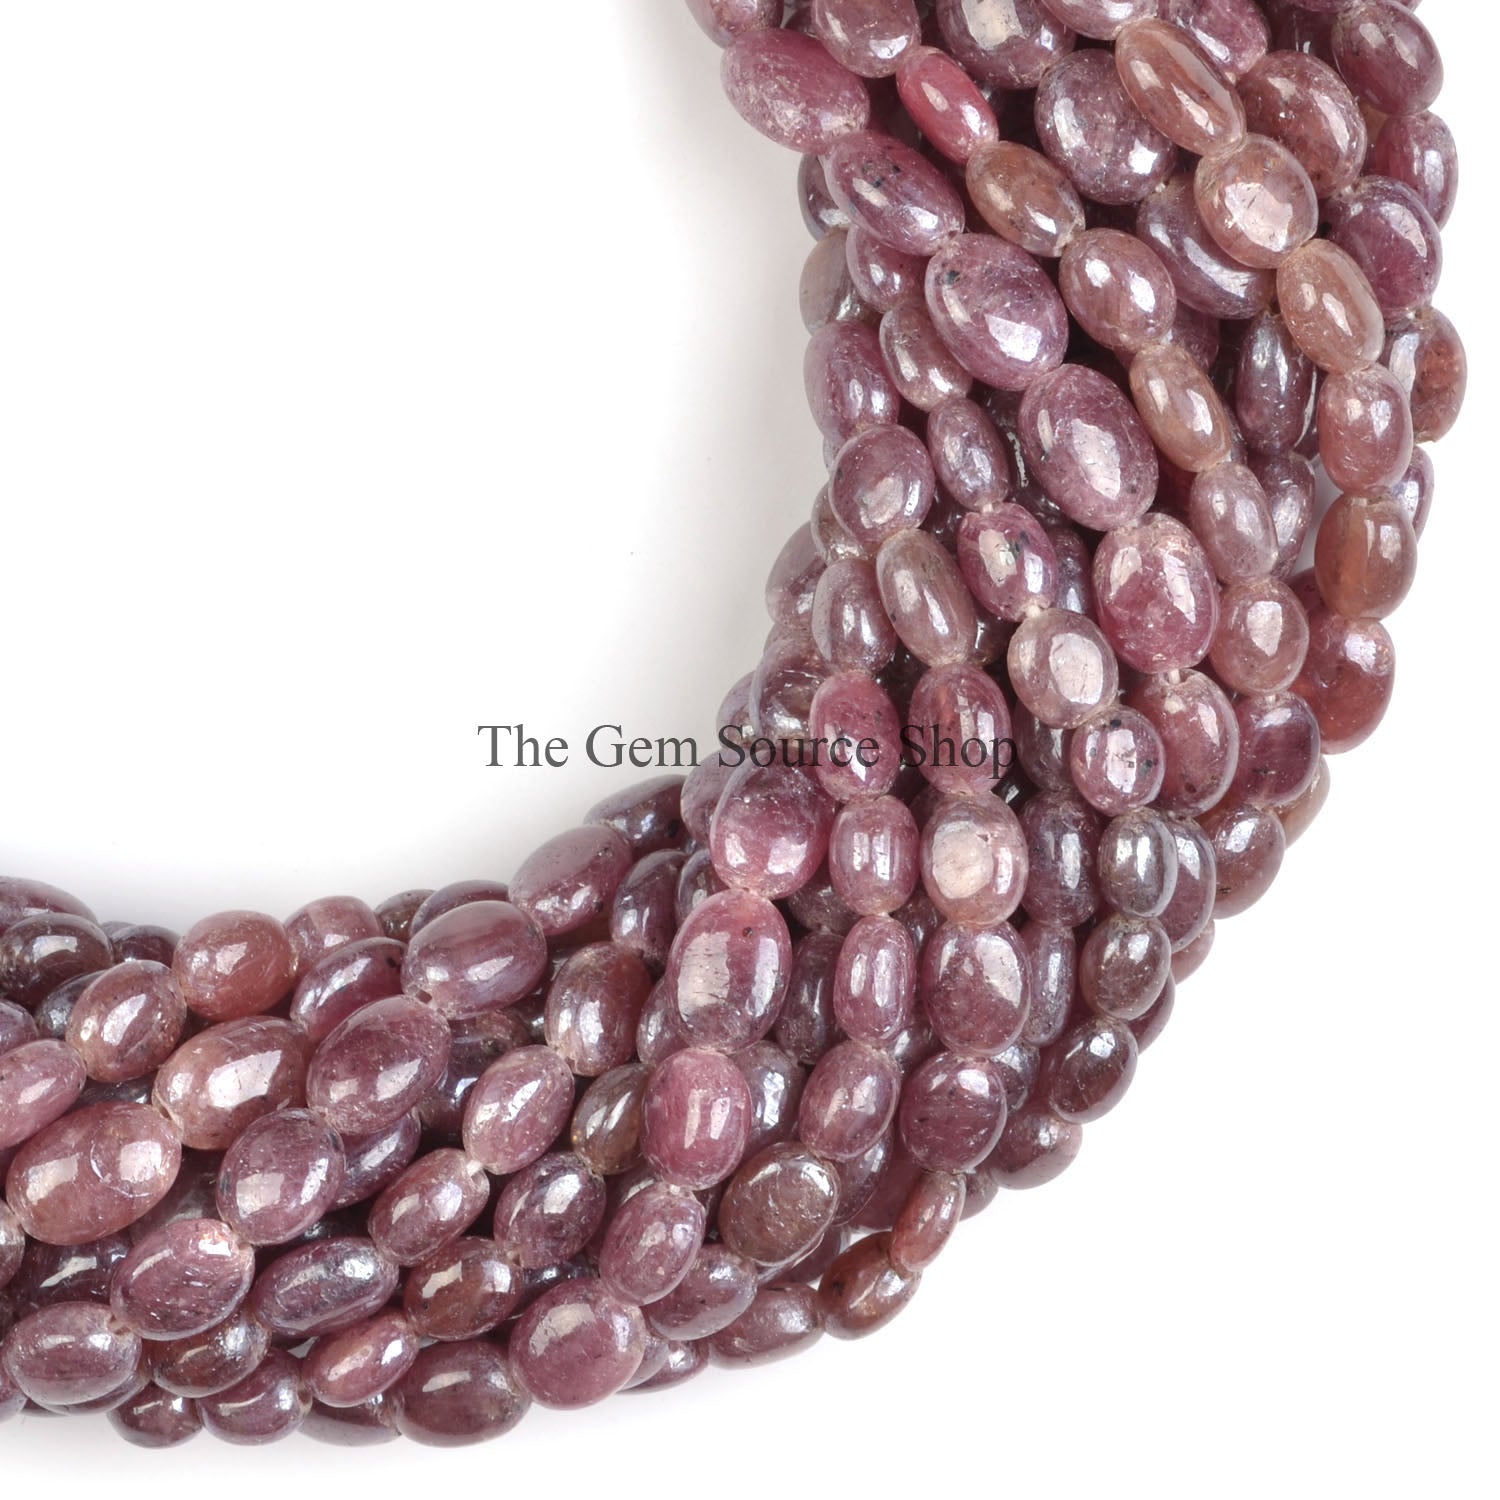 Ruby Coated Smooth Beads, Ruby Oval Shape Beads, Plain Ruby Beads, Ruby Gemstone Beads